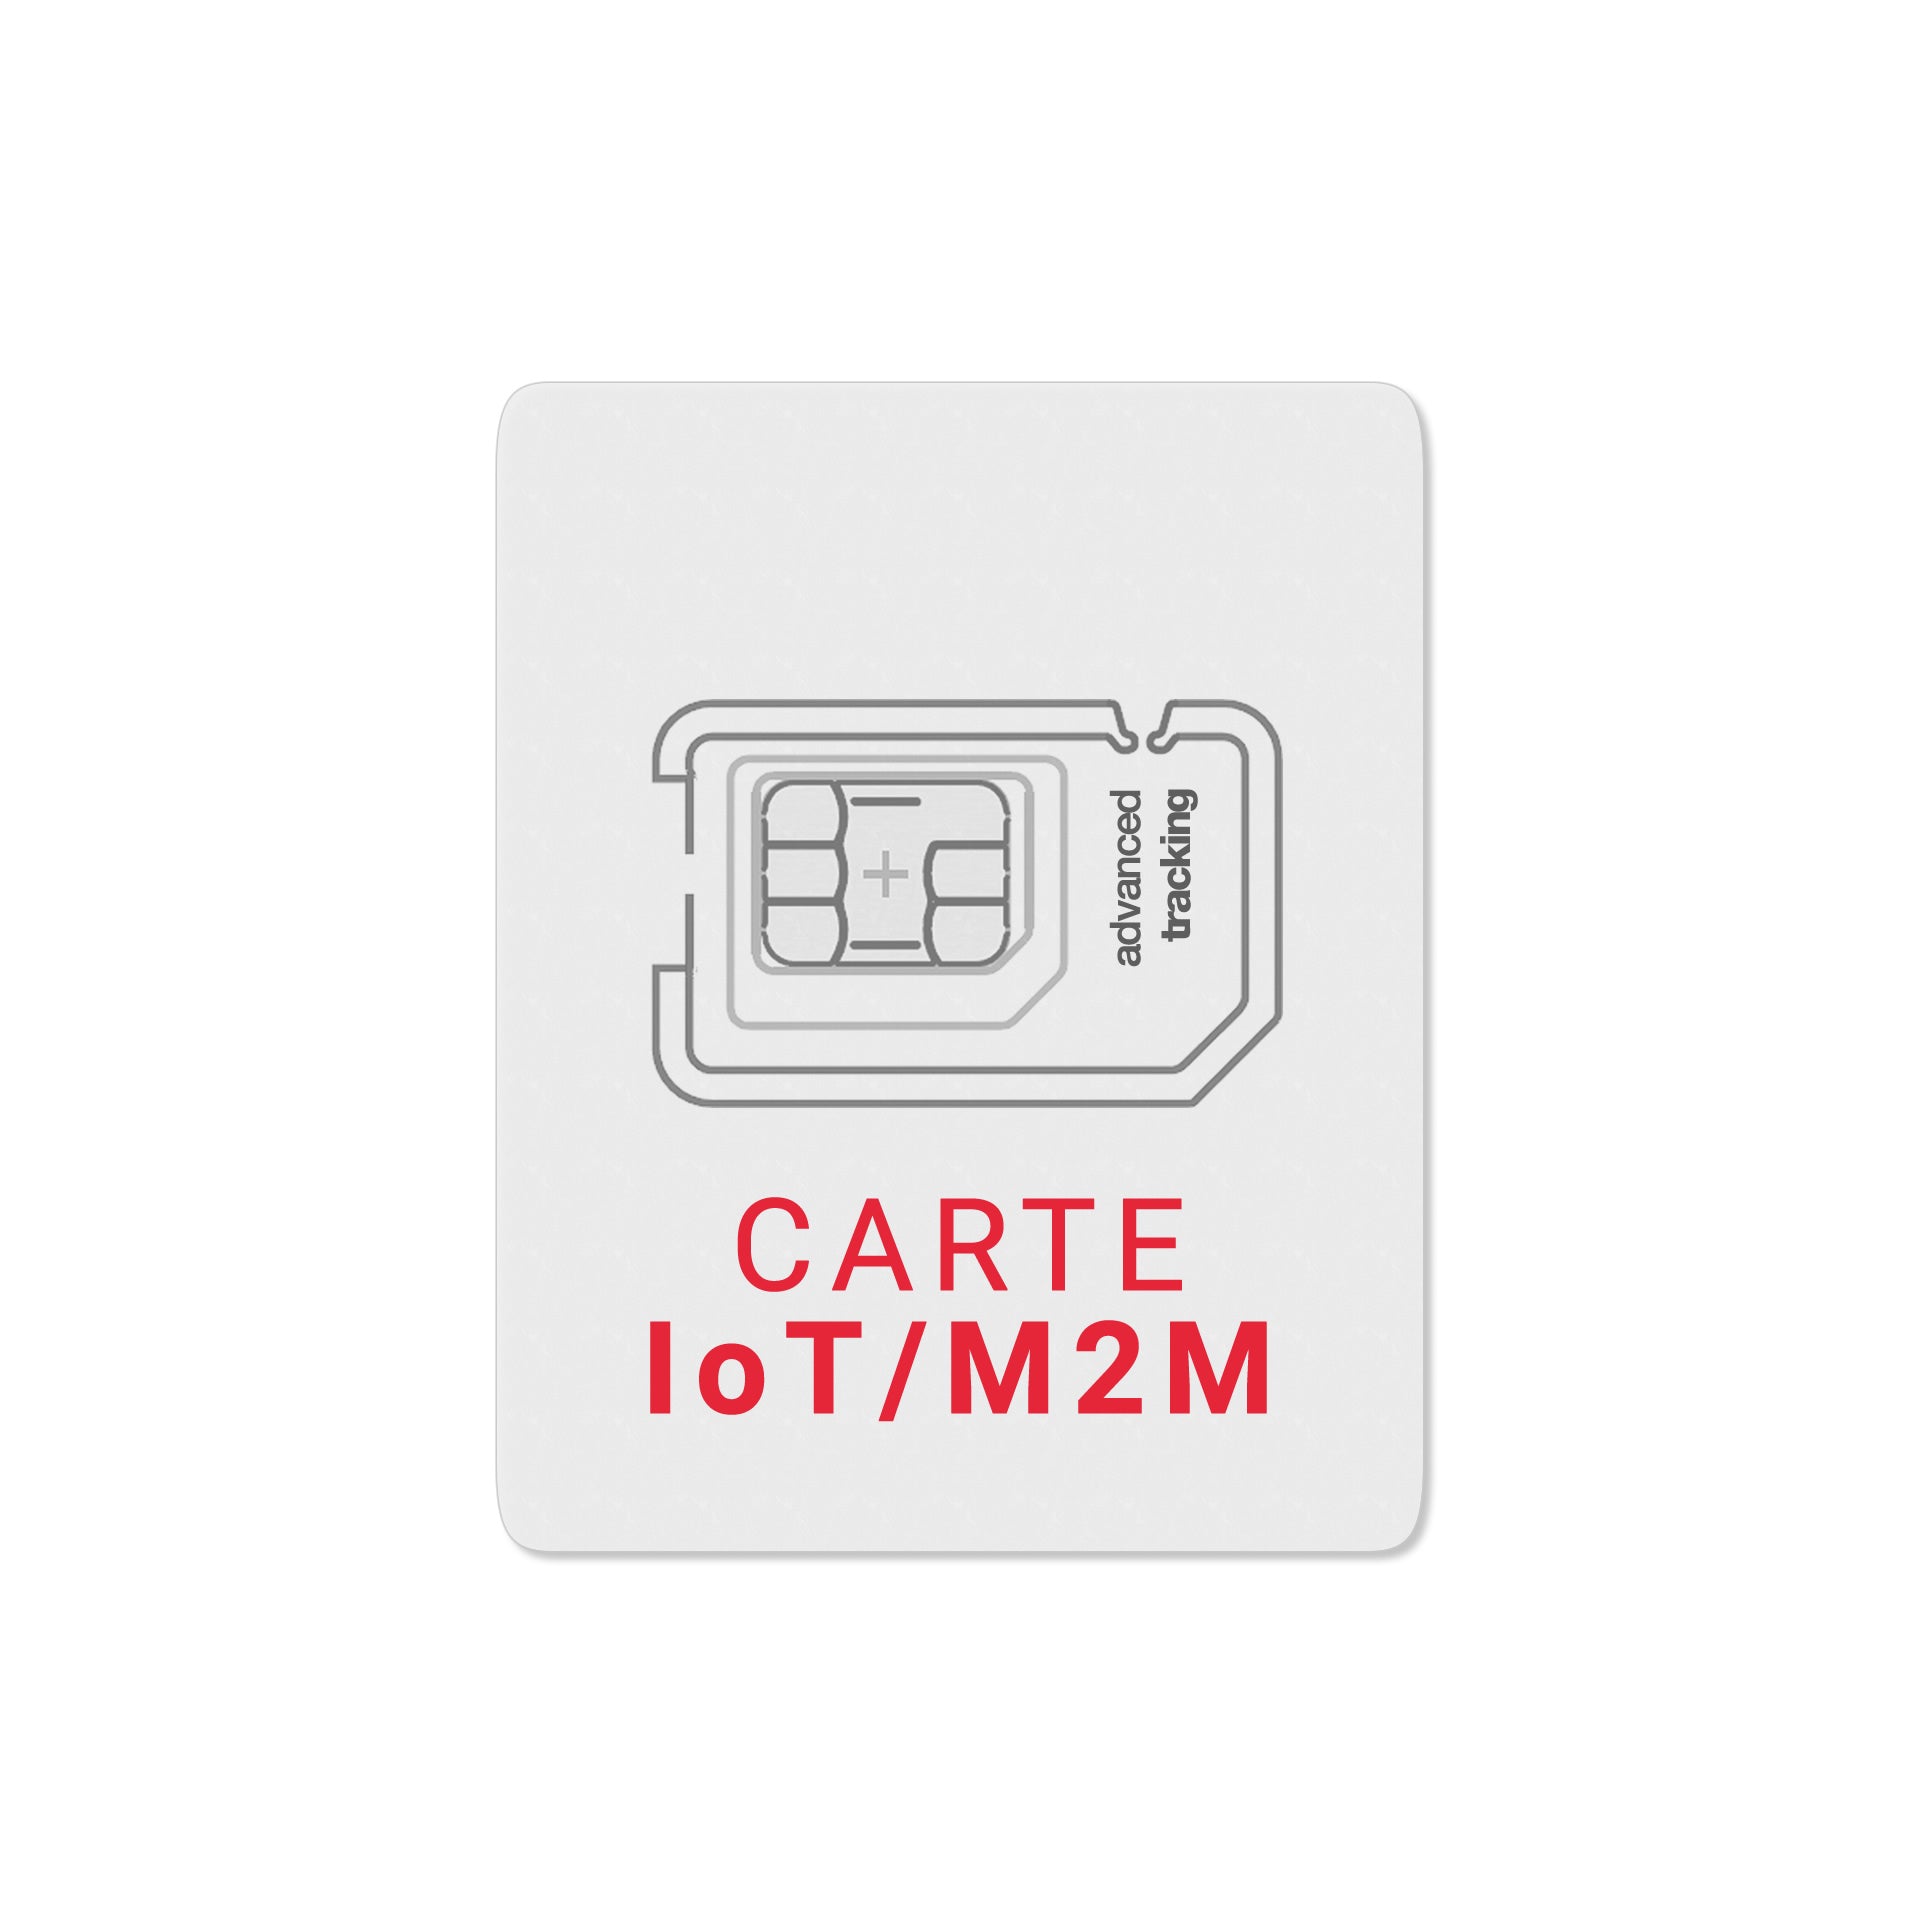 Tarjeta SIM de prepago IoT/M2M World - 35 euros HT - 250Mb datos - Validez 36 MESES